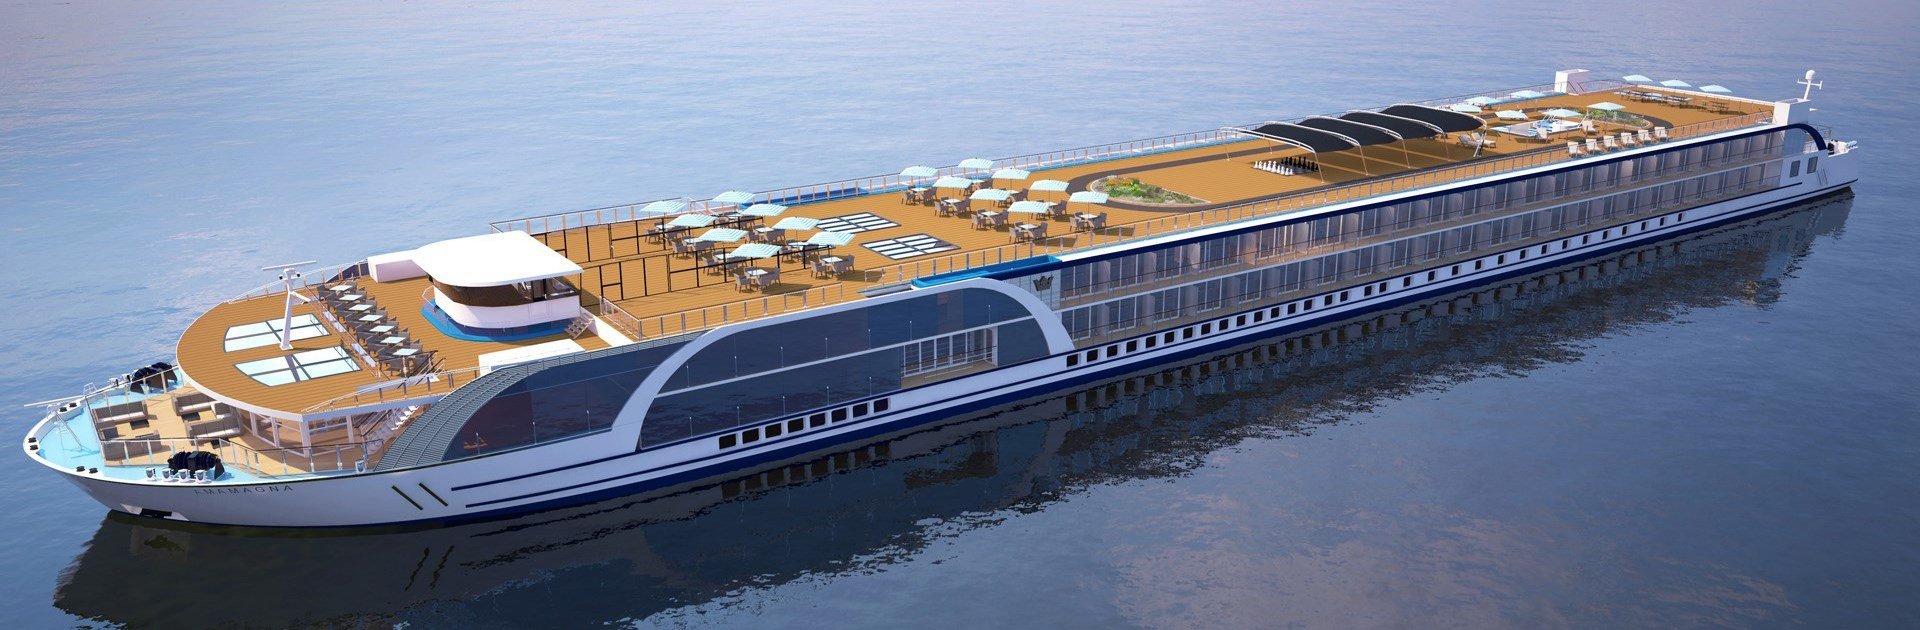 Ama Waterways Debuts European River Cruise Ship AmaMagna